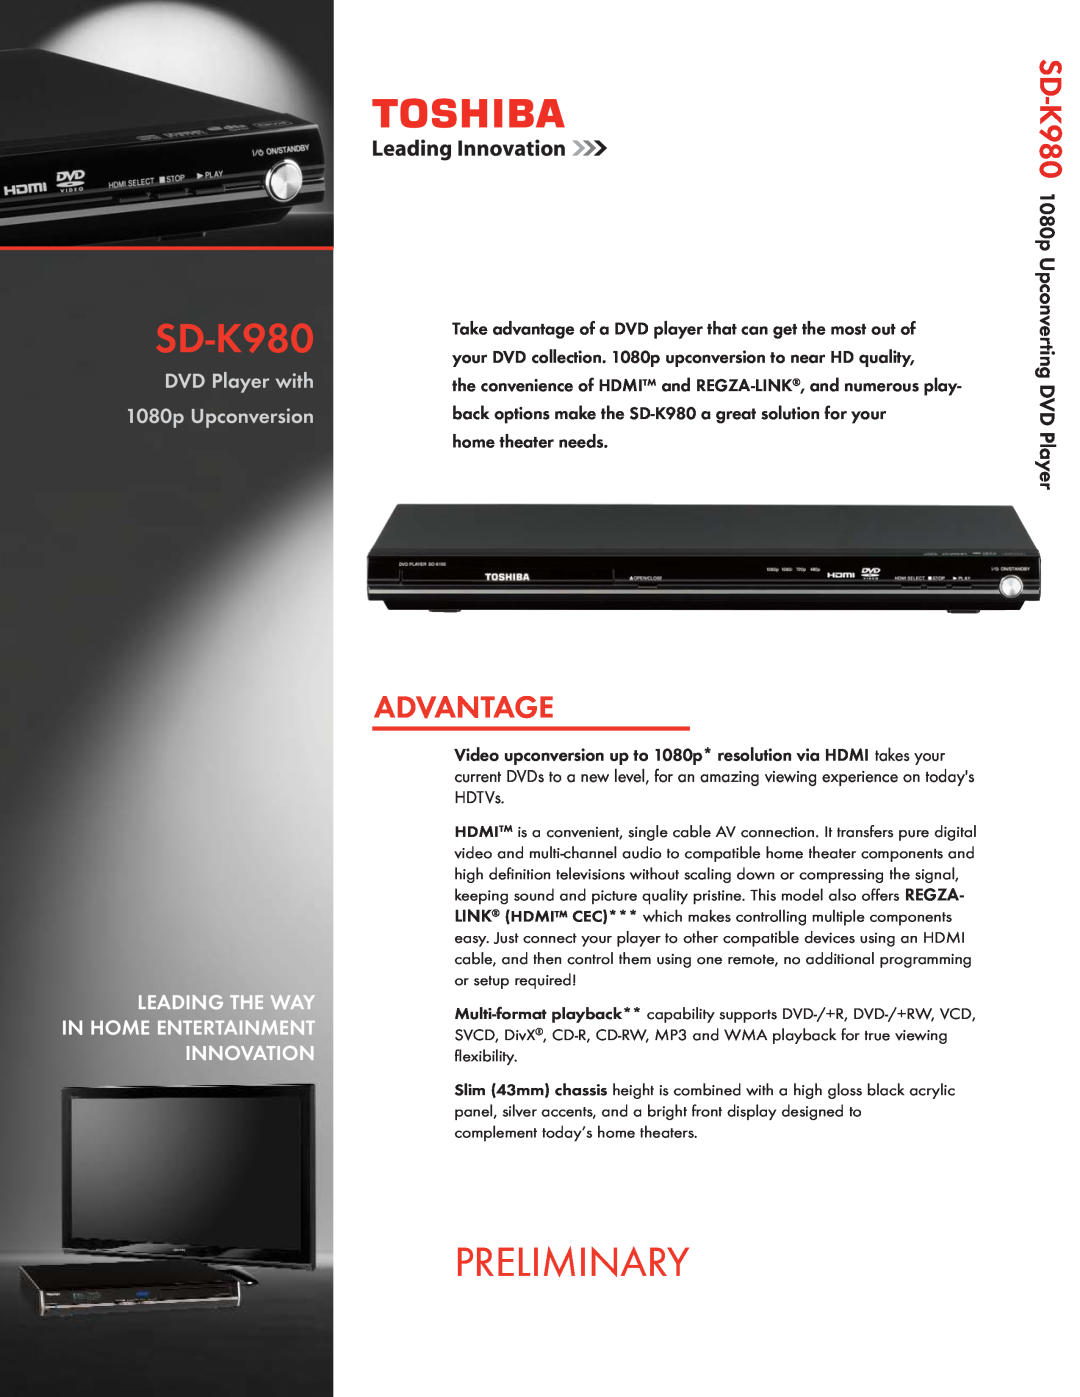 Toshiba manual SD-K980 1080p Upconverting DVD Player, Preliminary, Advantage, DVD Player with 1080p Upconversion 